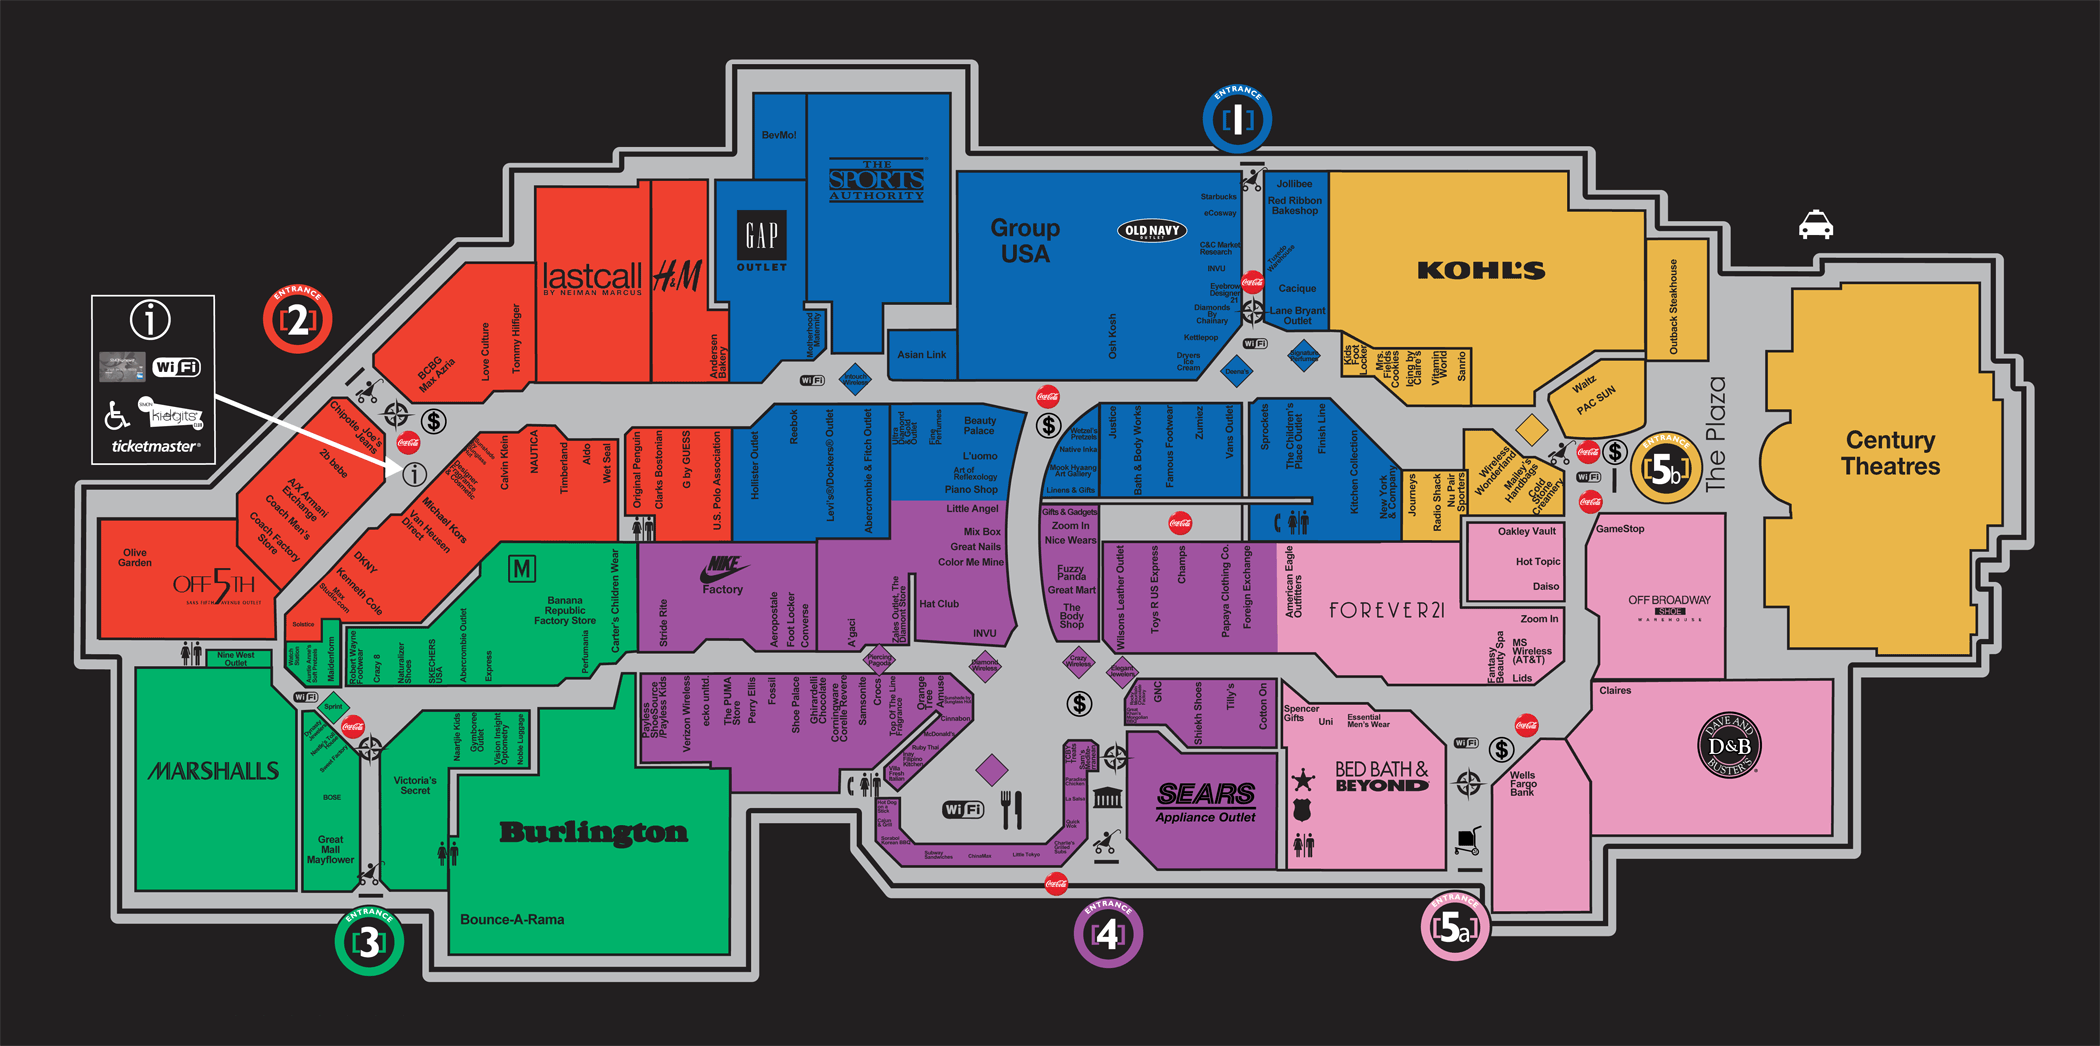 sawgrass mall map